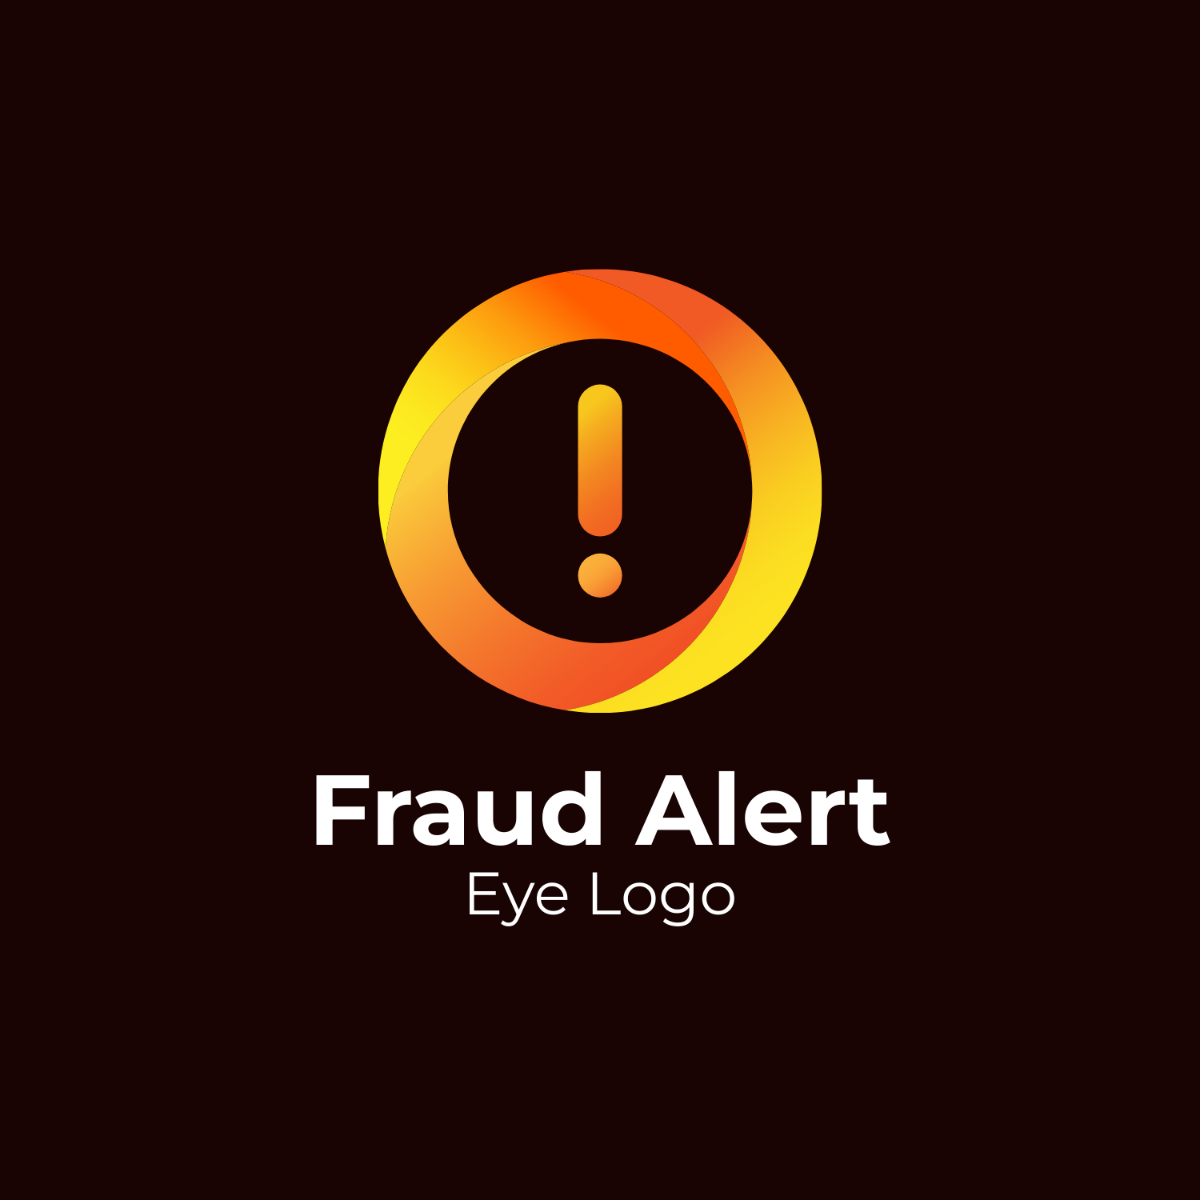 Fraud Alert Eye Logo